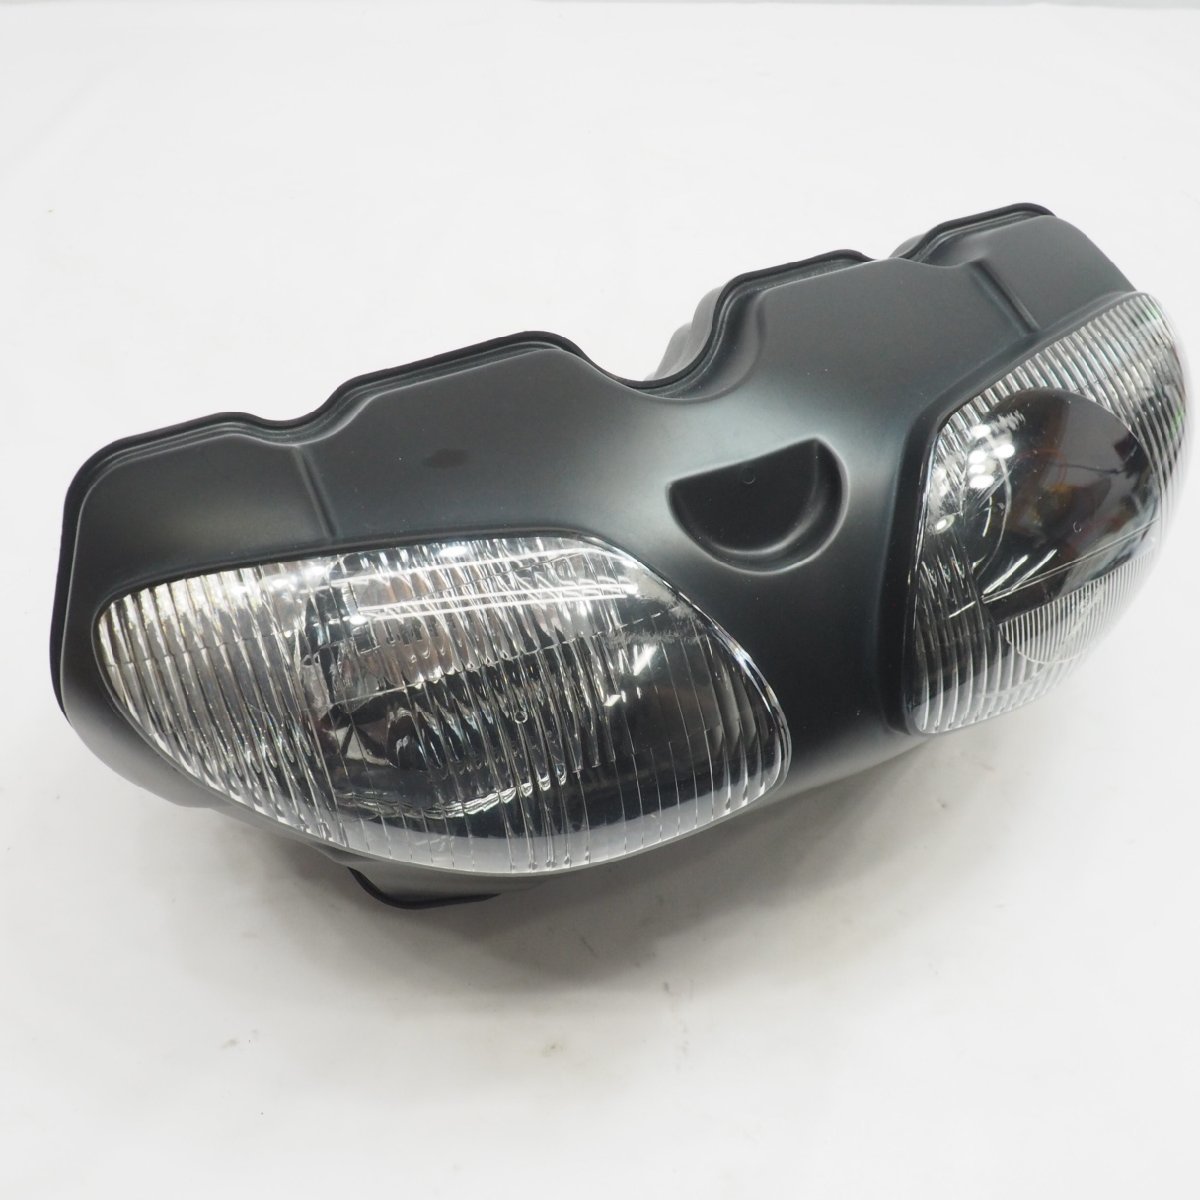 SV400S ヘッドライト 純正ヘッドランプ VK53A SV650S VP52A headlight headlampレストア用にの画像1